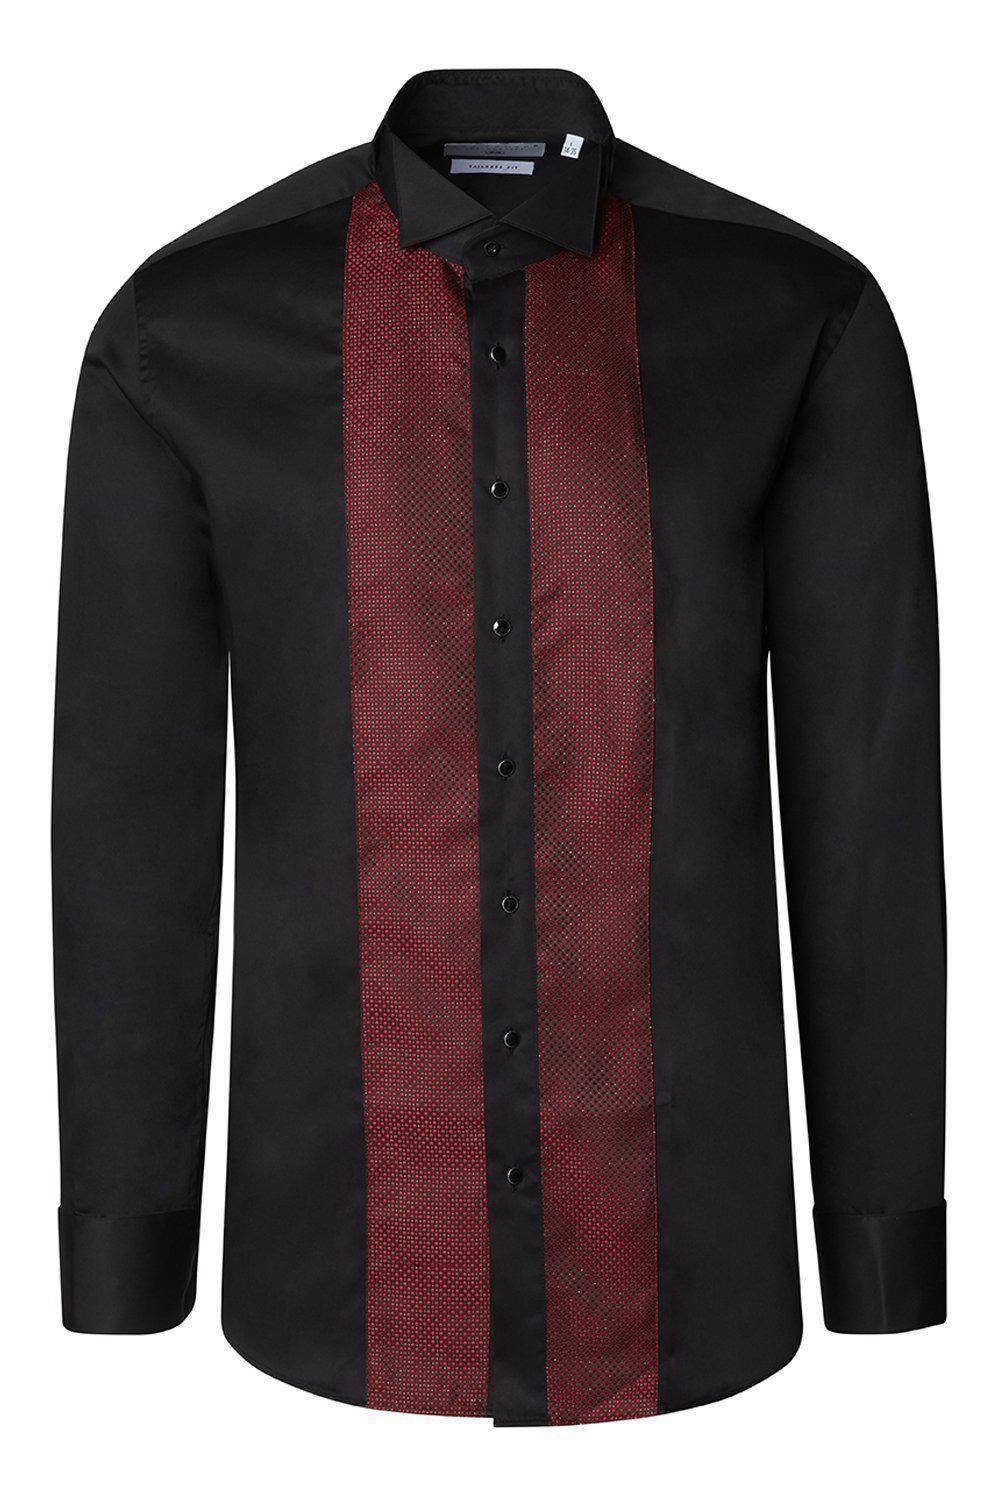 Pique Bib Tuxedo Shirt - Black Burgundy - Ron Tomson